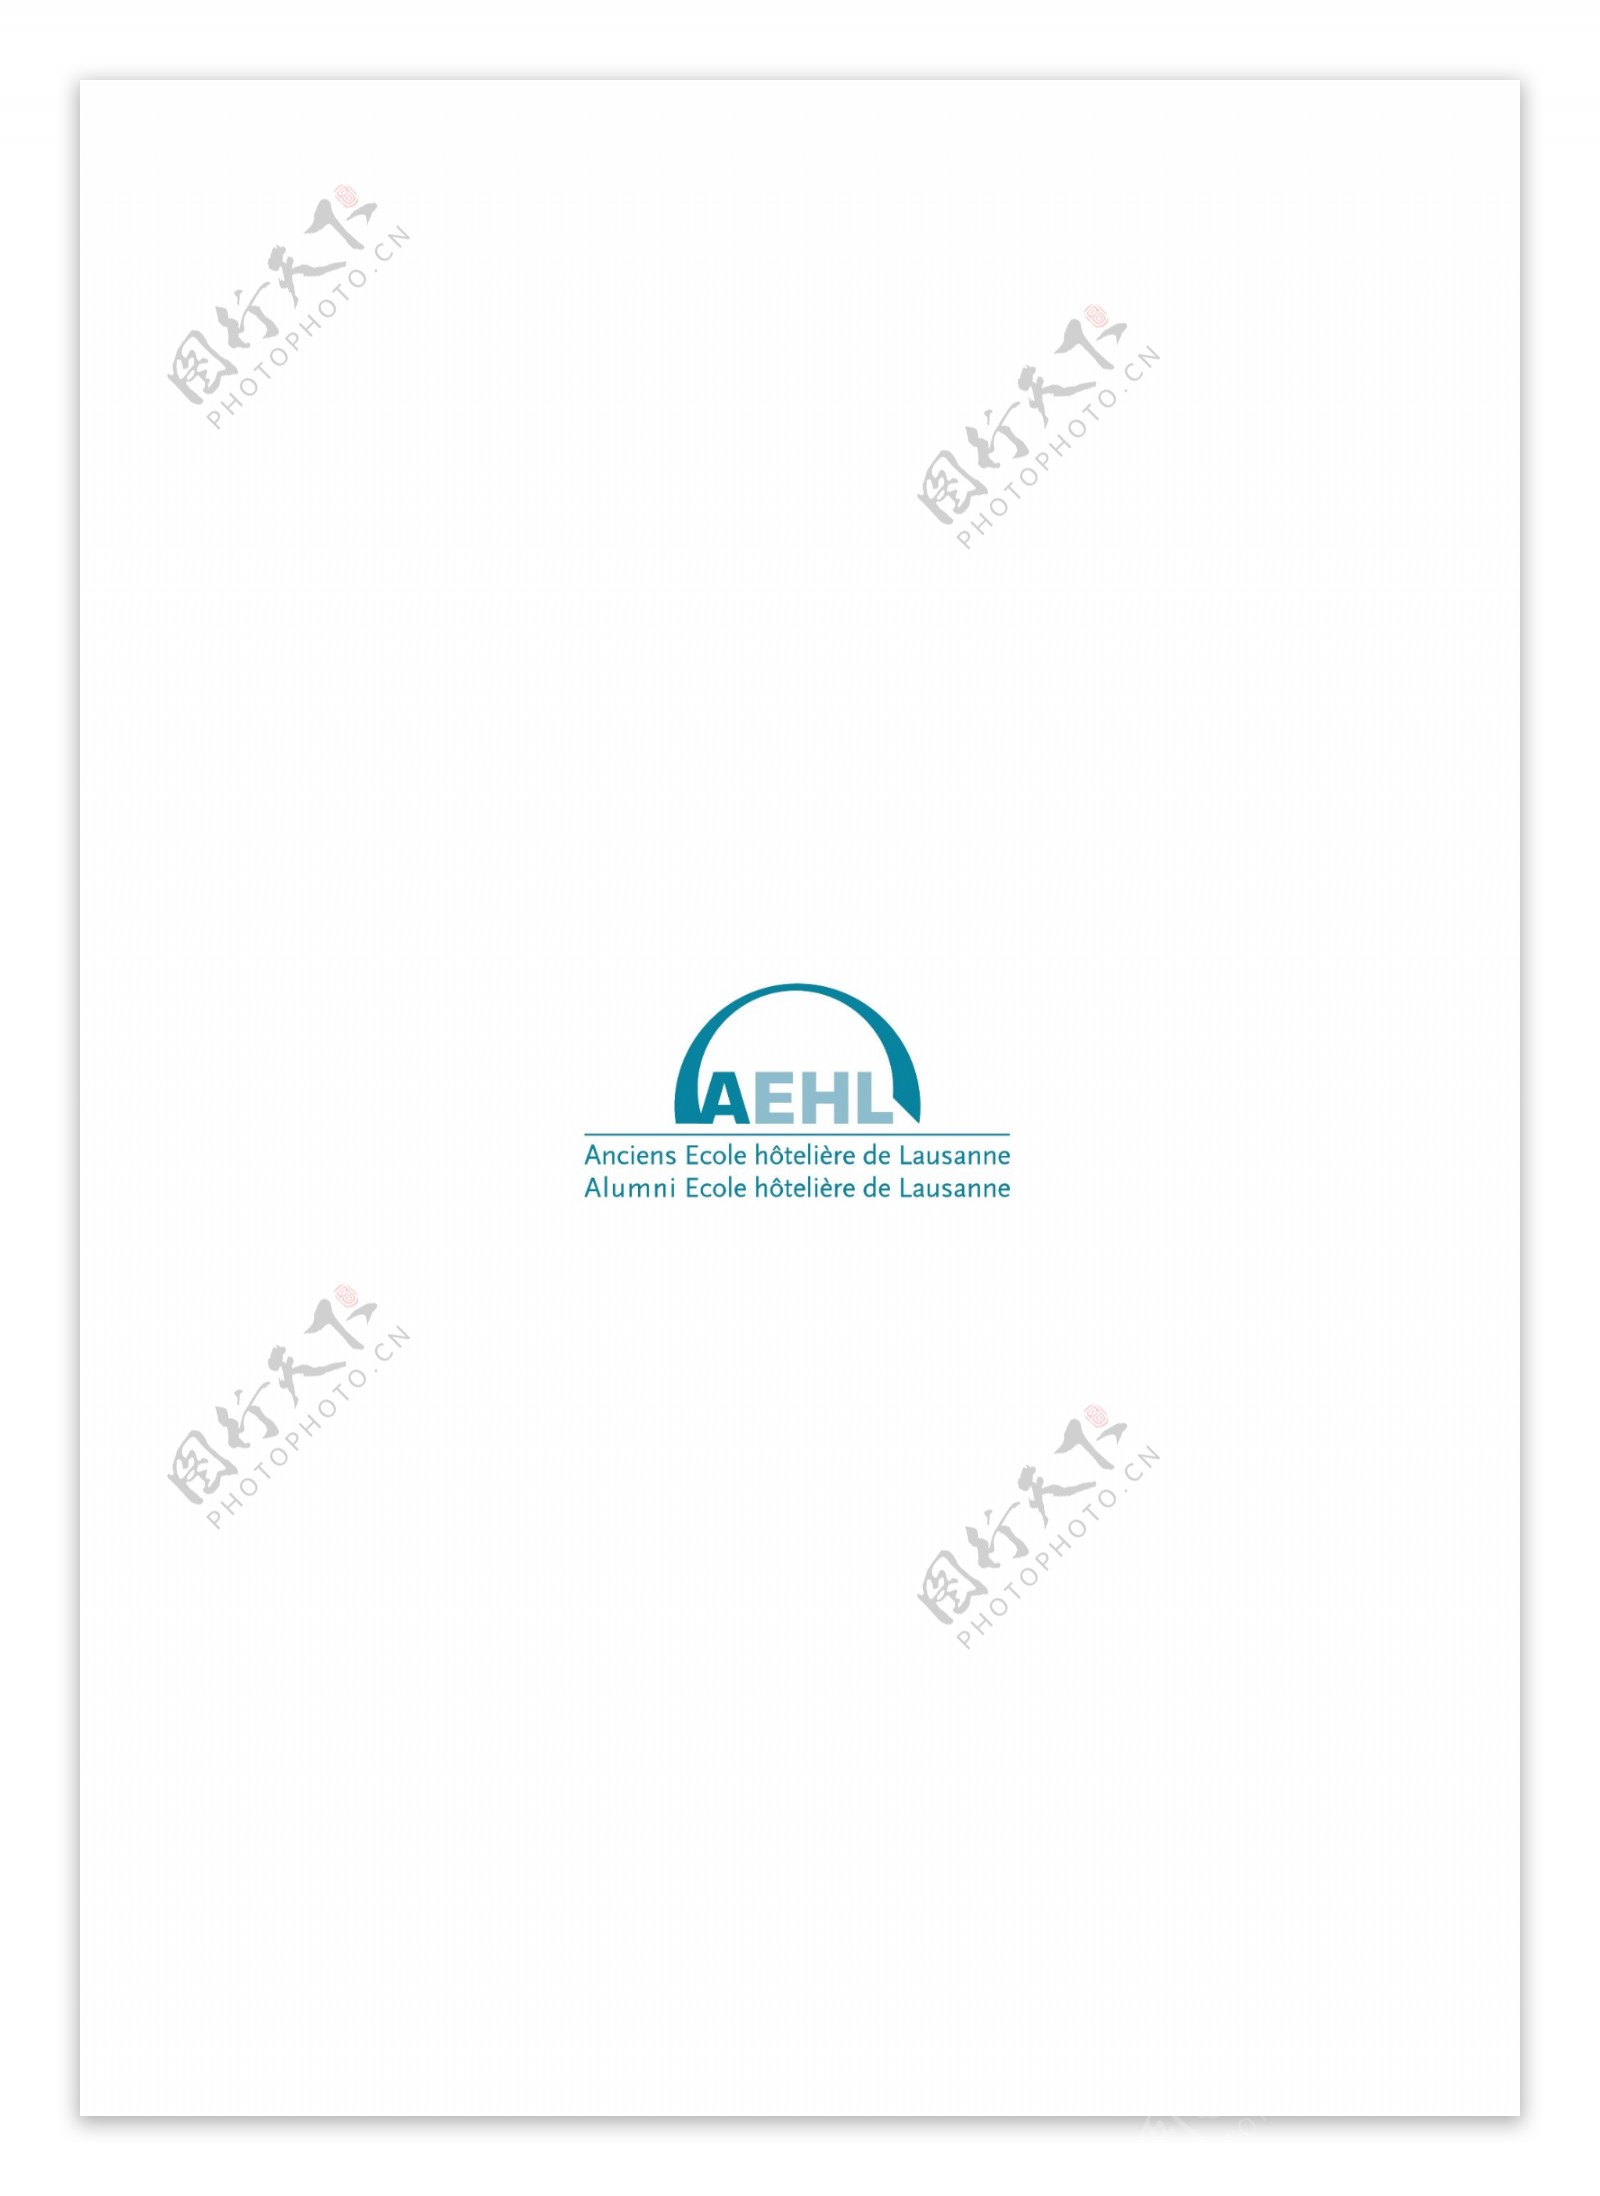 AEHLlogo设计欣赏AEHL酒店业标志下载标志设计欣赏